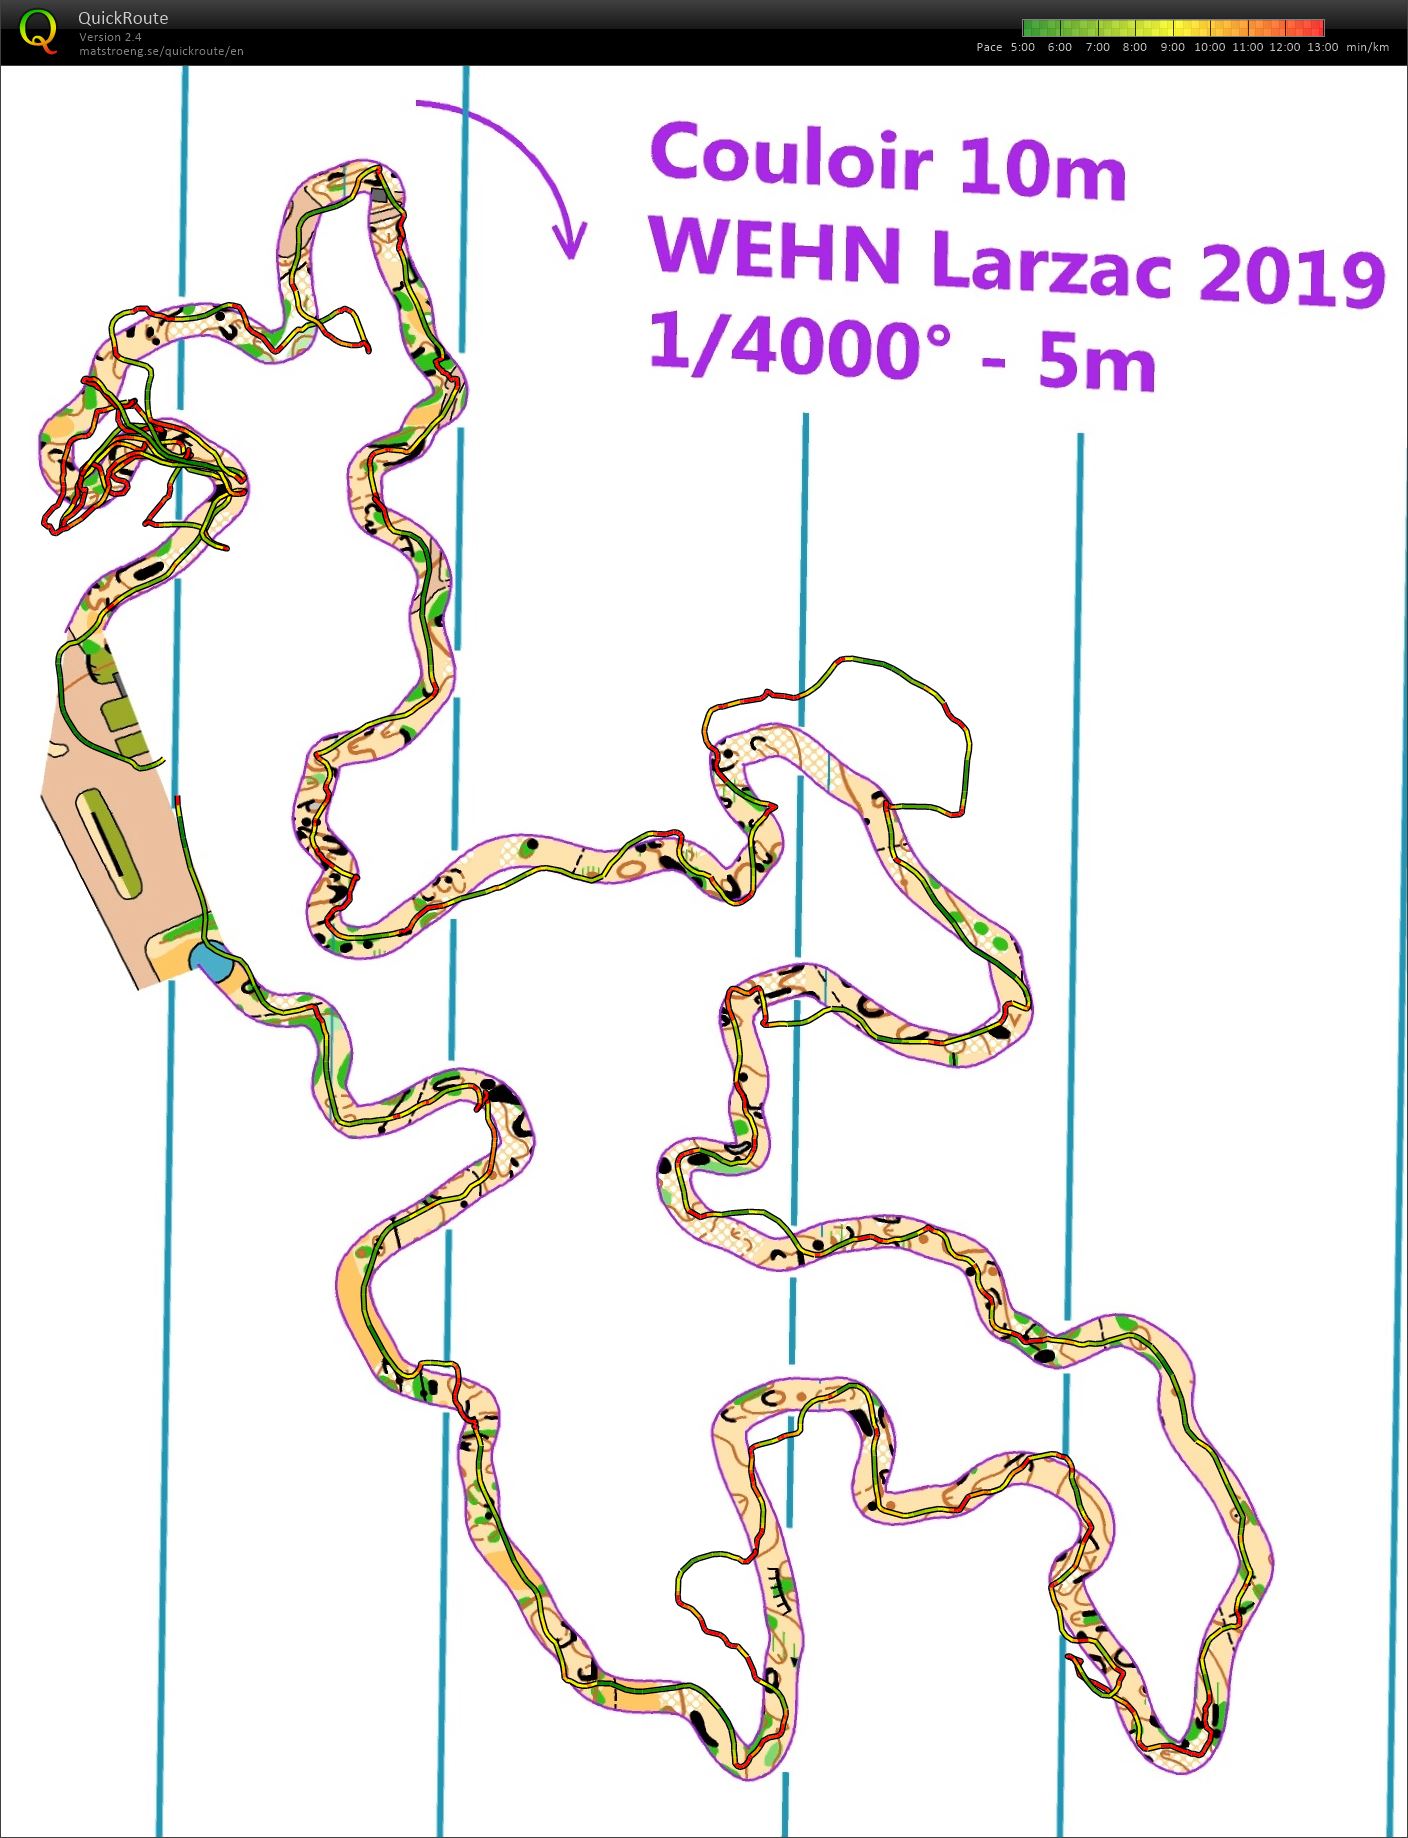 WEHN Larzac Couloir 10m (08-12-2018)